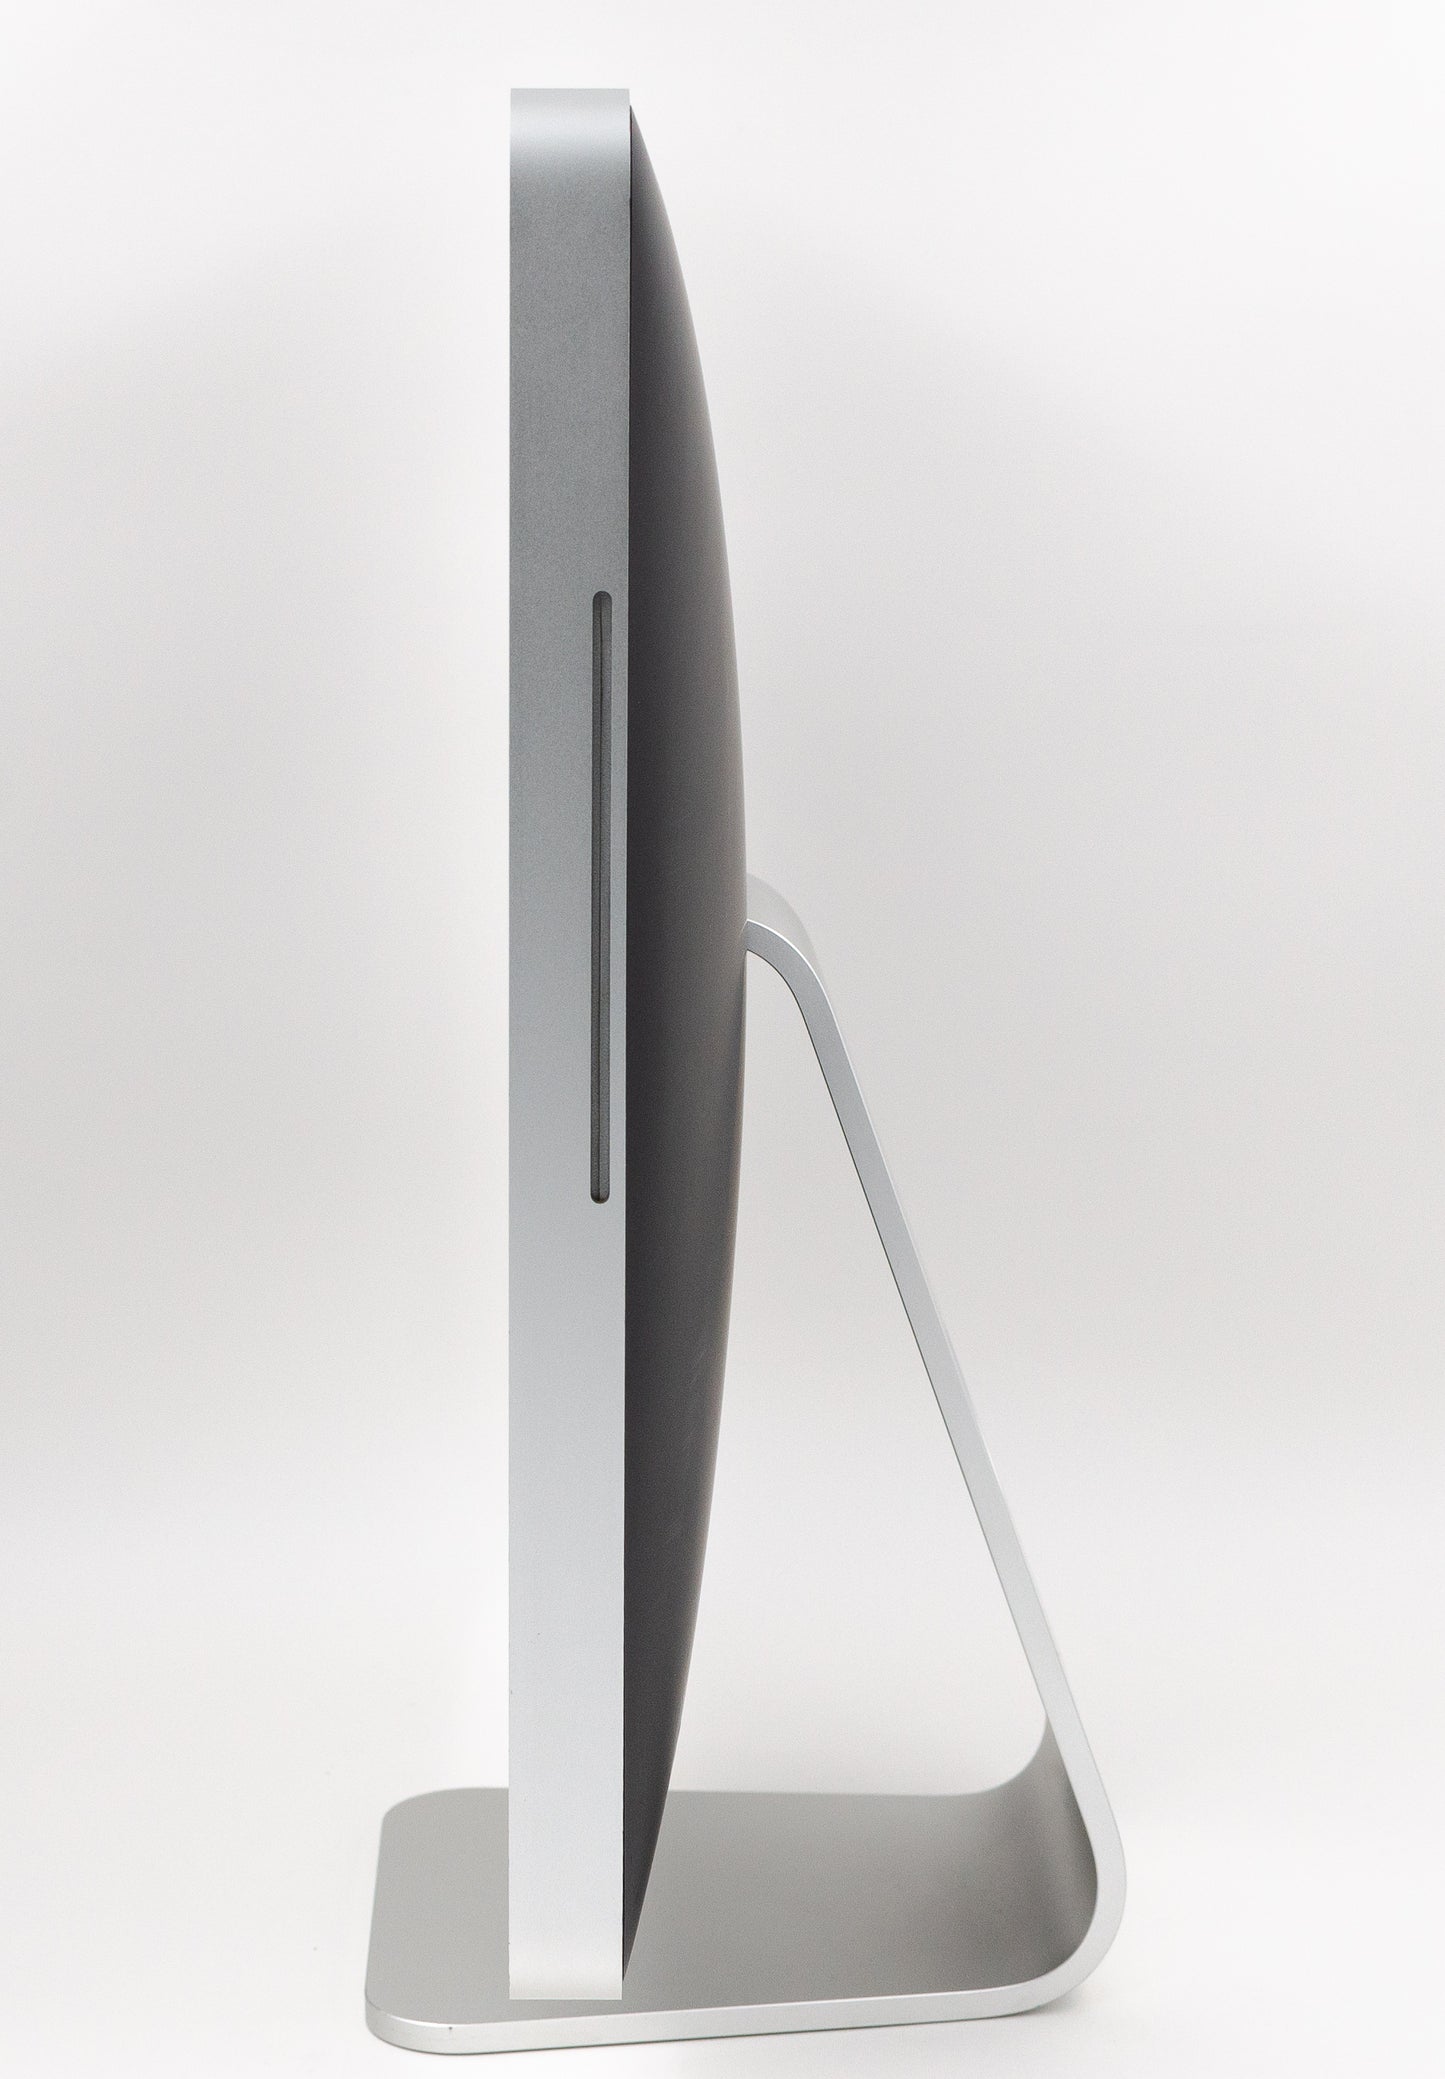 apple-mid-2007-20-inch-imac-a1224-aluminum-c2d - 2.4ghz, 2gb ram, 2400 xt - 128mb gpu-2